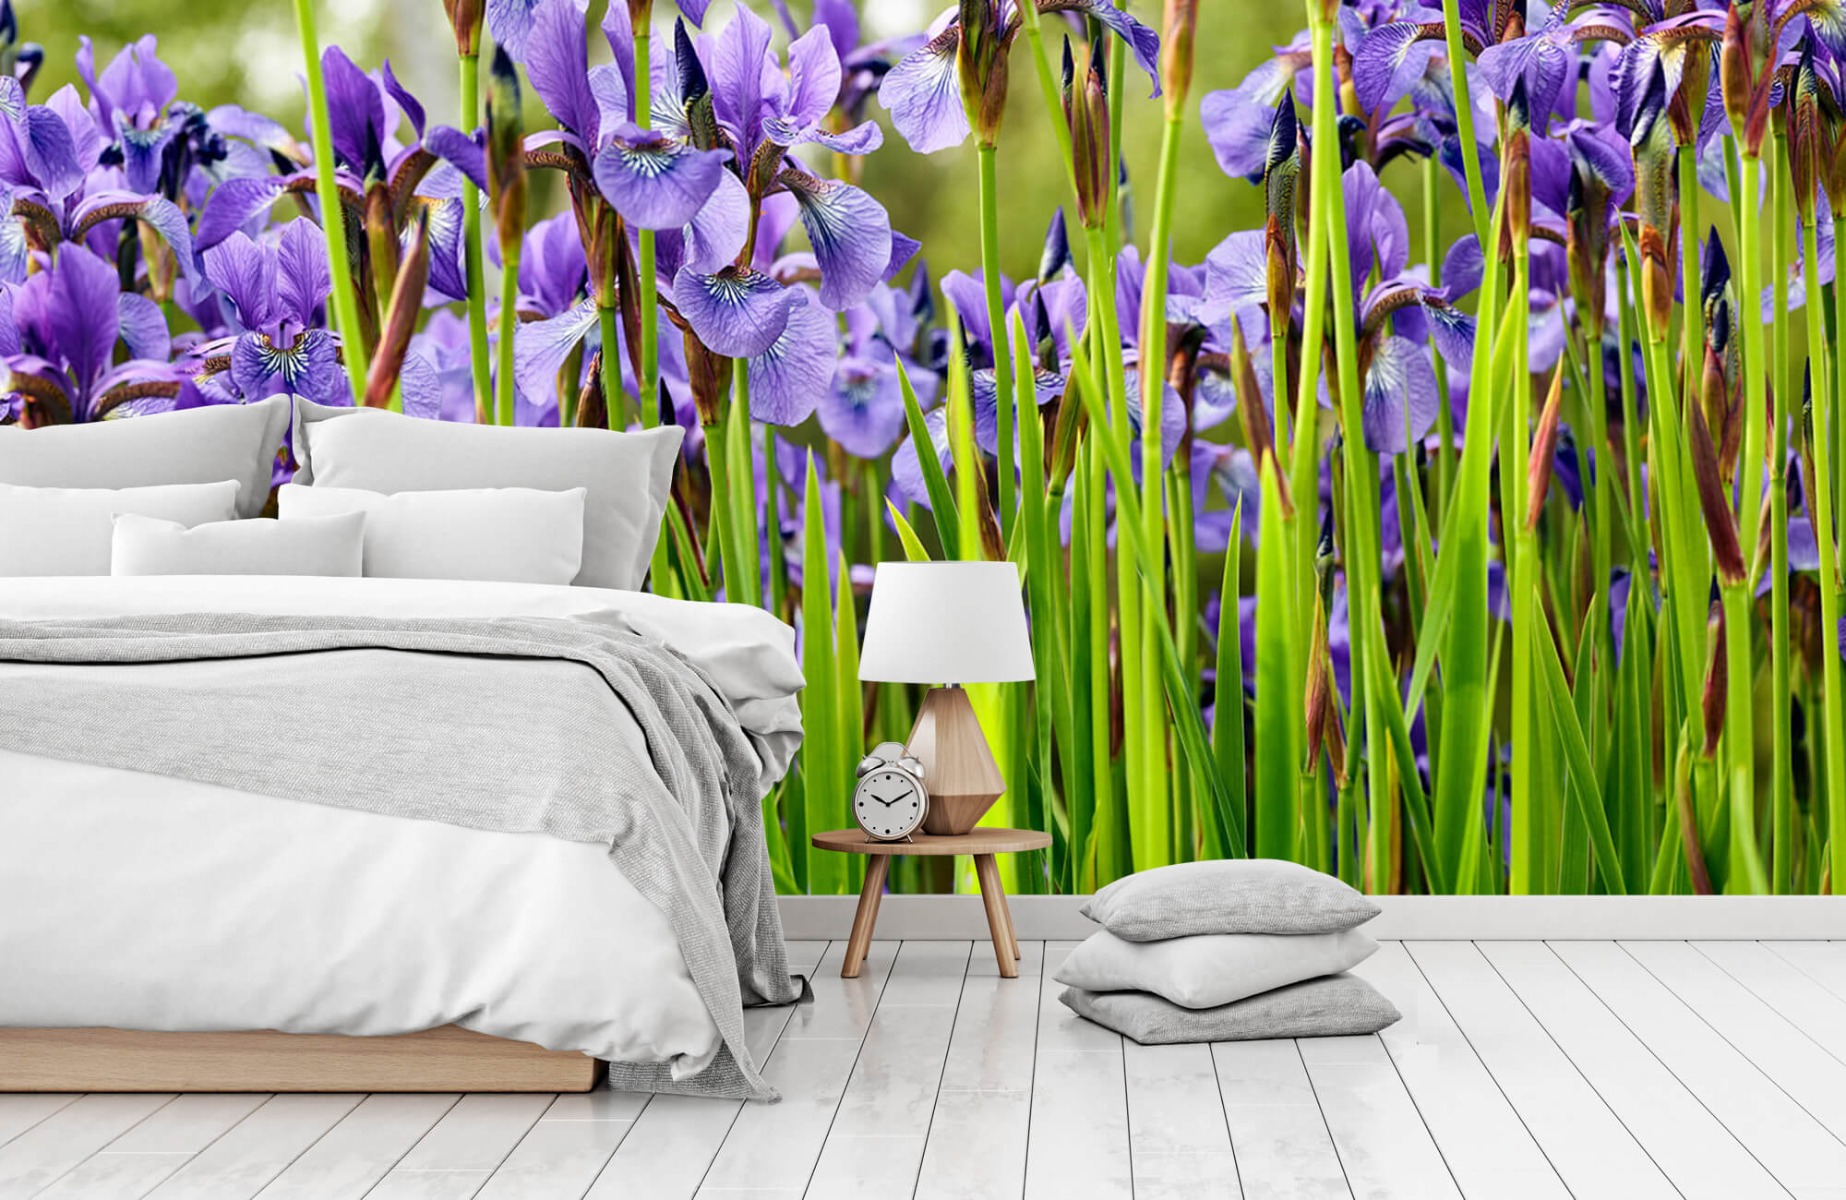 Flower fields - Irises  - Bedroom 15